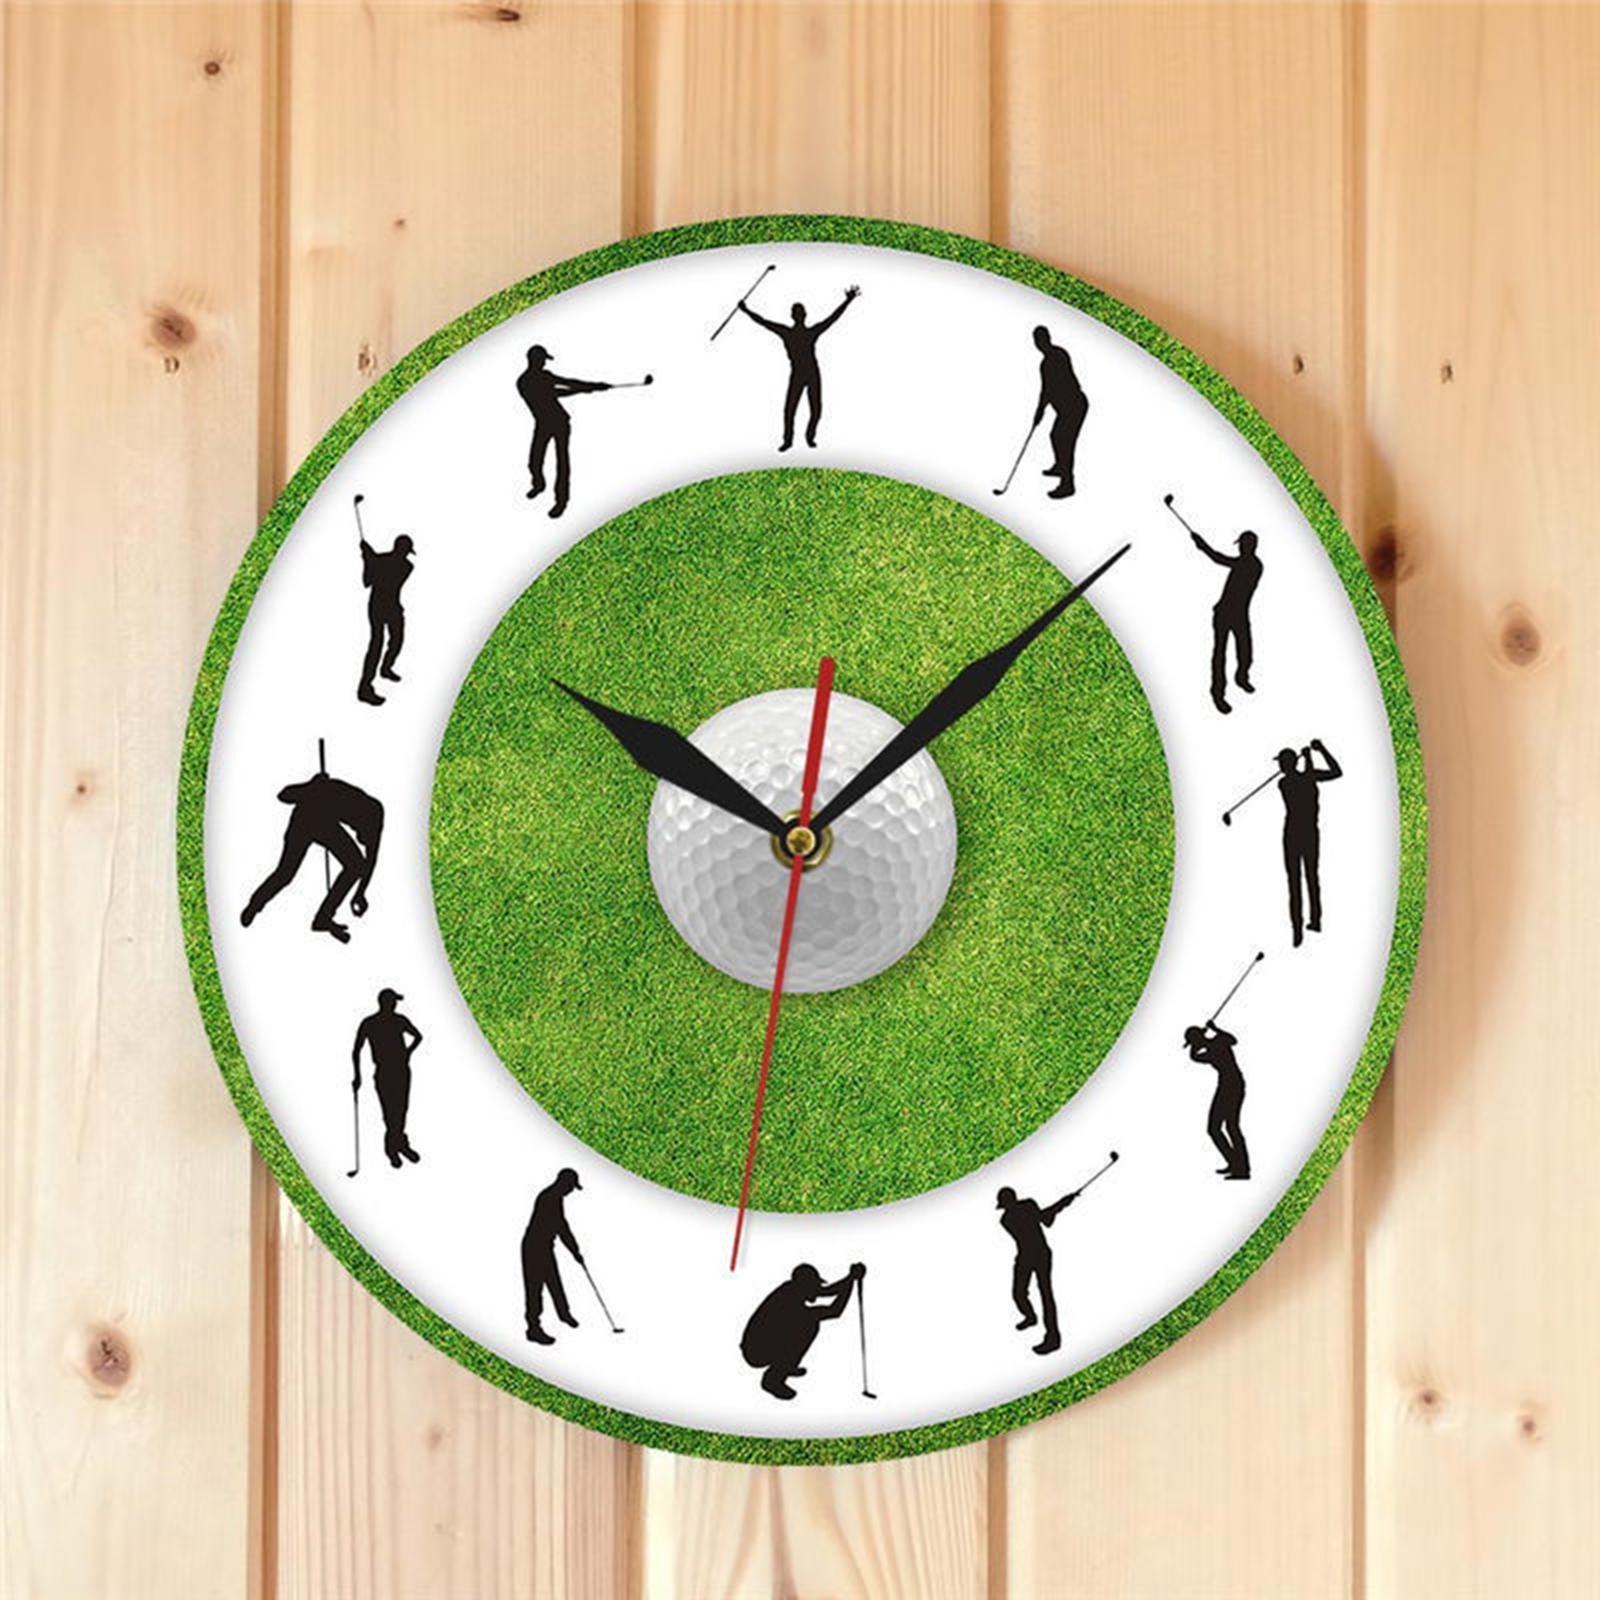 Round Golfer Figure Grass Wall Clocks 30cm for Laundry Room